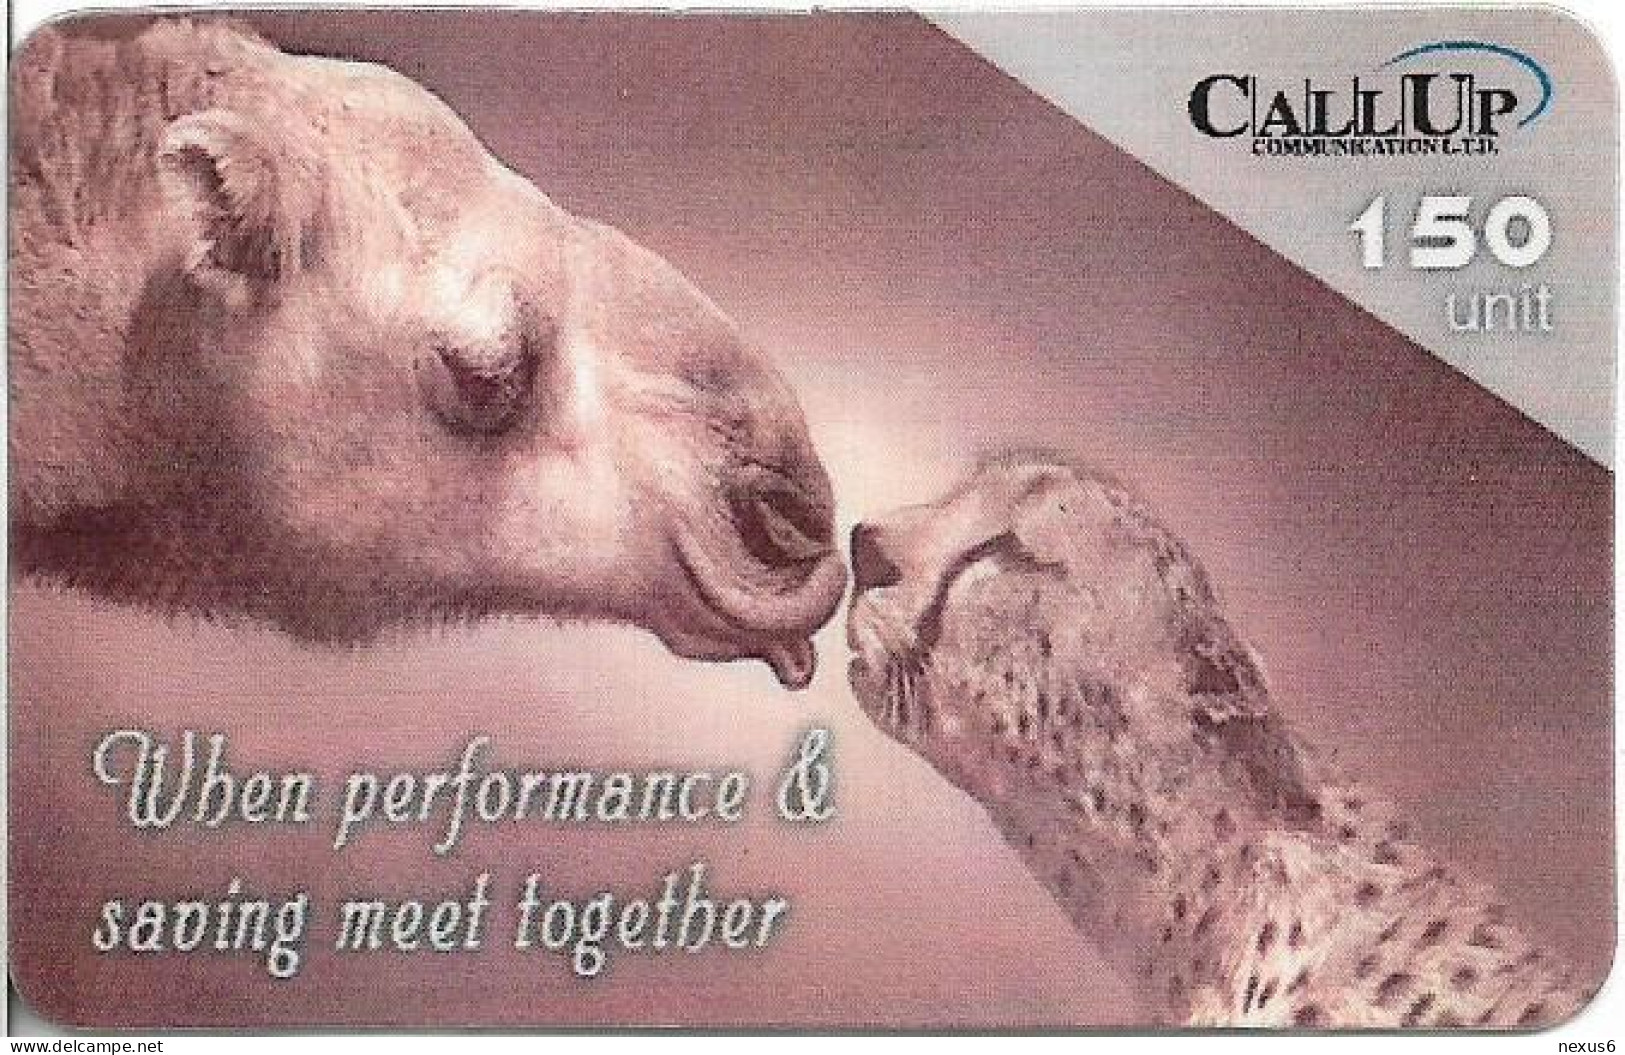 Israel - CallUp Commun. Ltd - Cheetah & Camel, Exp.31.12.2001, Remote Mem. 150Units, Used - Israele